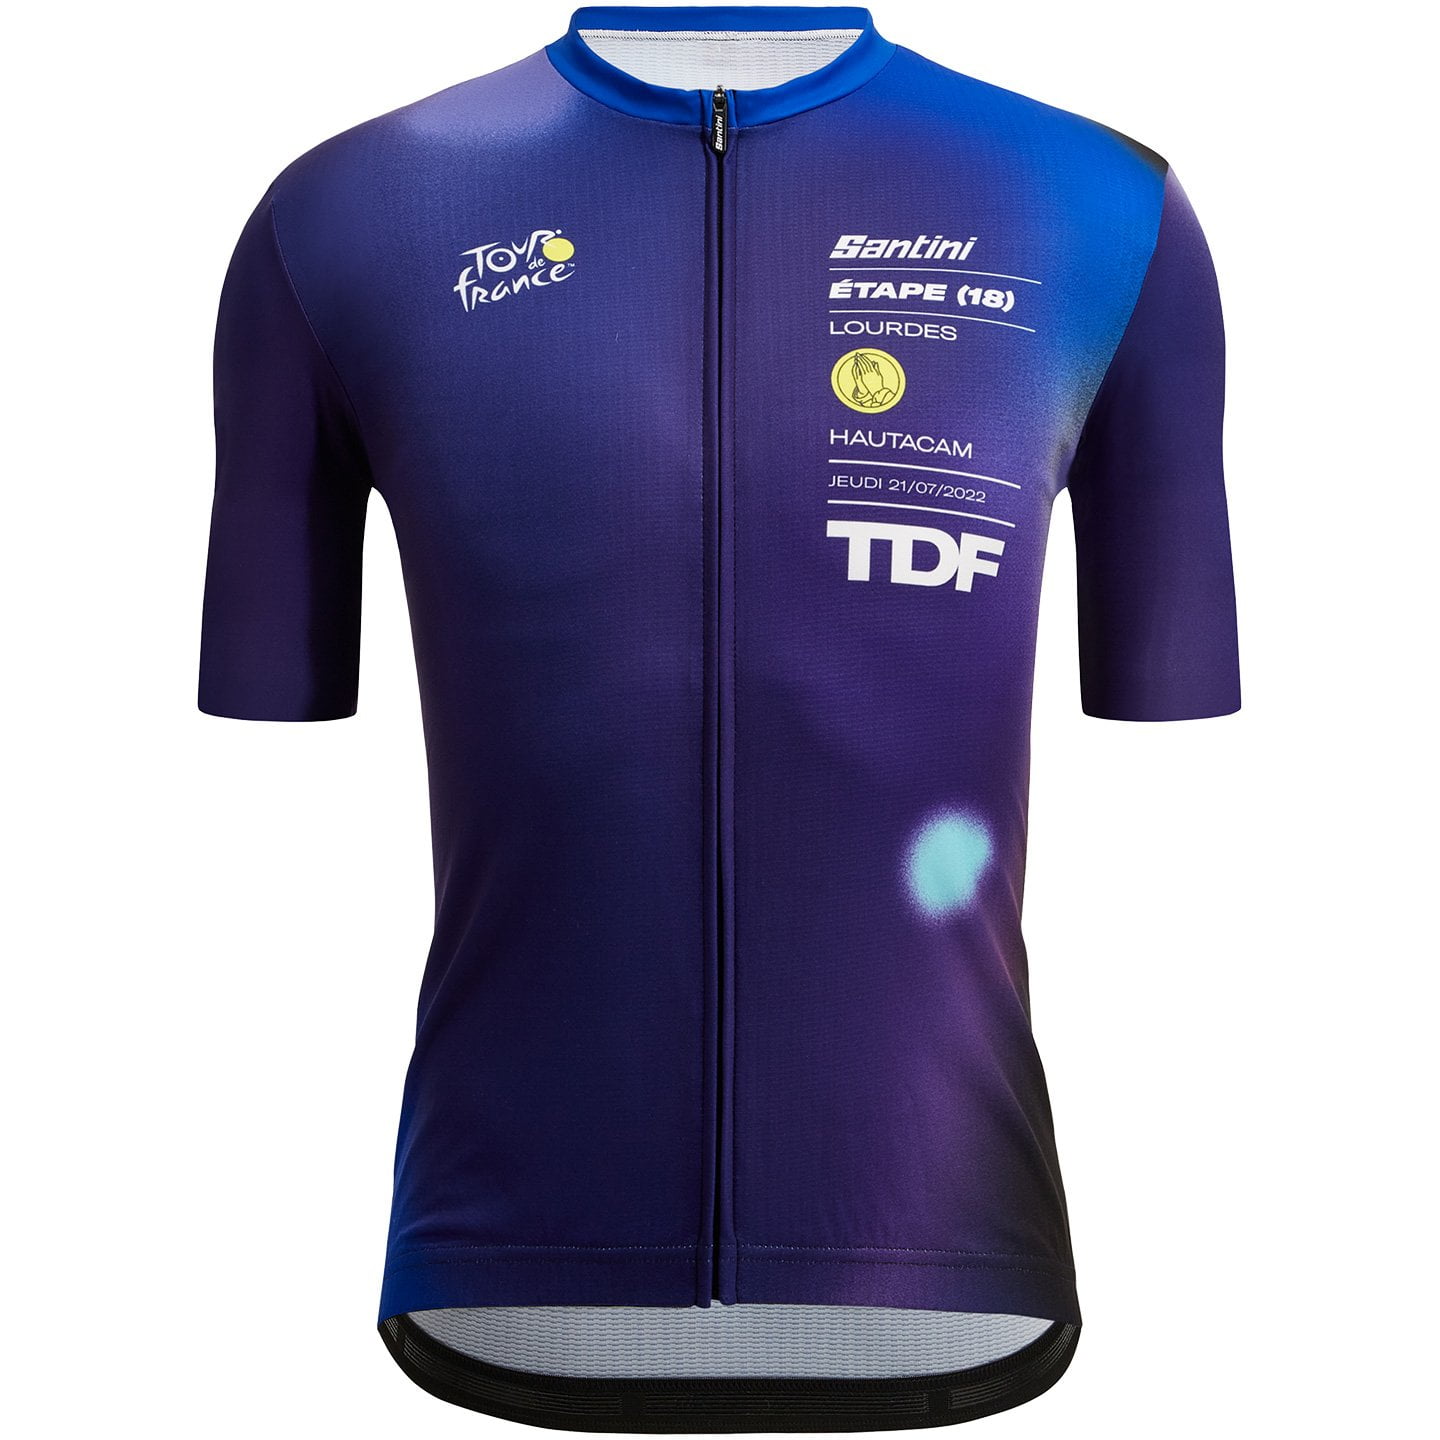 TOUR DE FRANCE Lourdes-Hautacam 2022 Short Sleeve Jersey, for men, size XL, Bike Jersey, Cycle gear